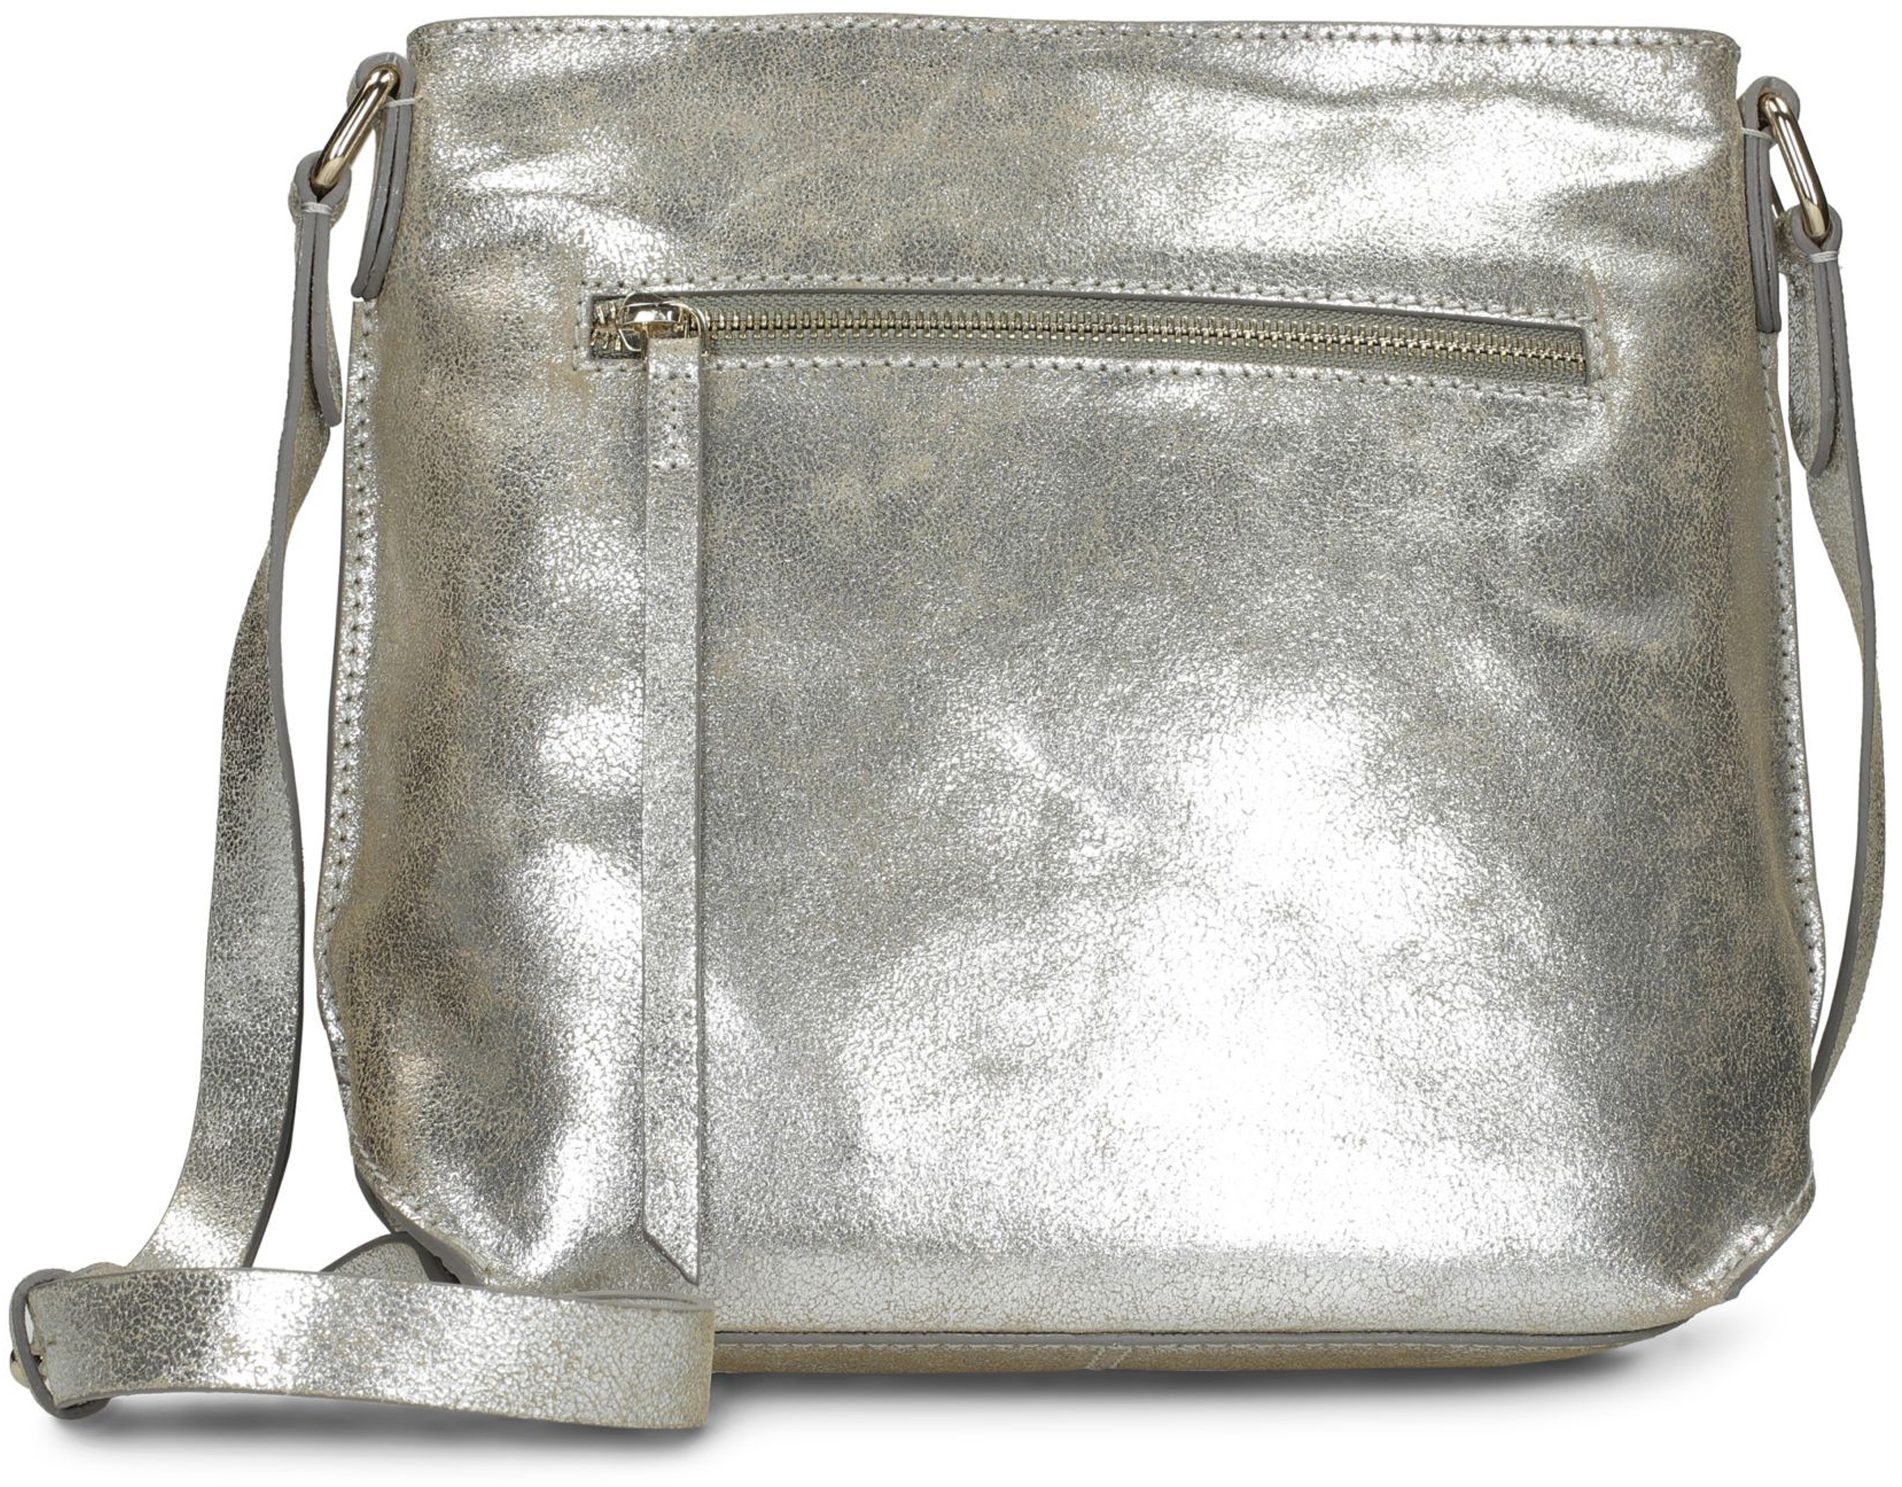 Clarks Topsham Jewel Silver Leather 26134025 - Cross Body Bags ...